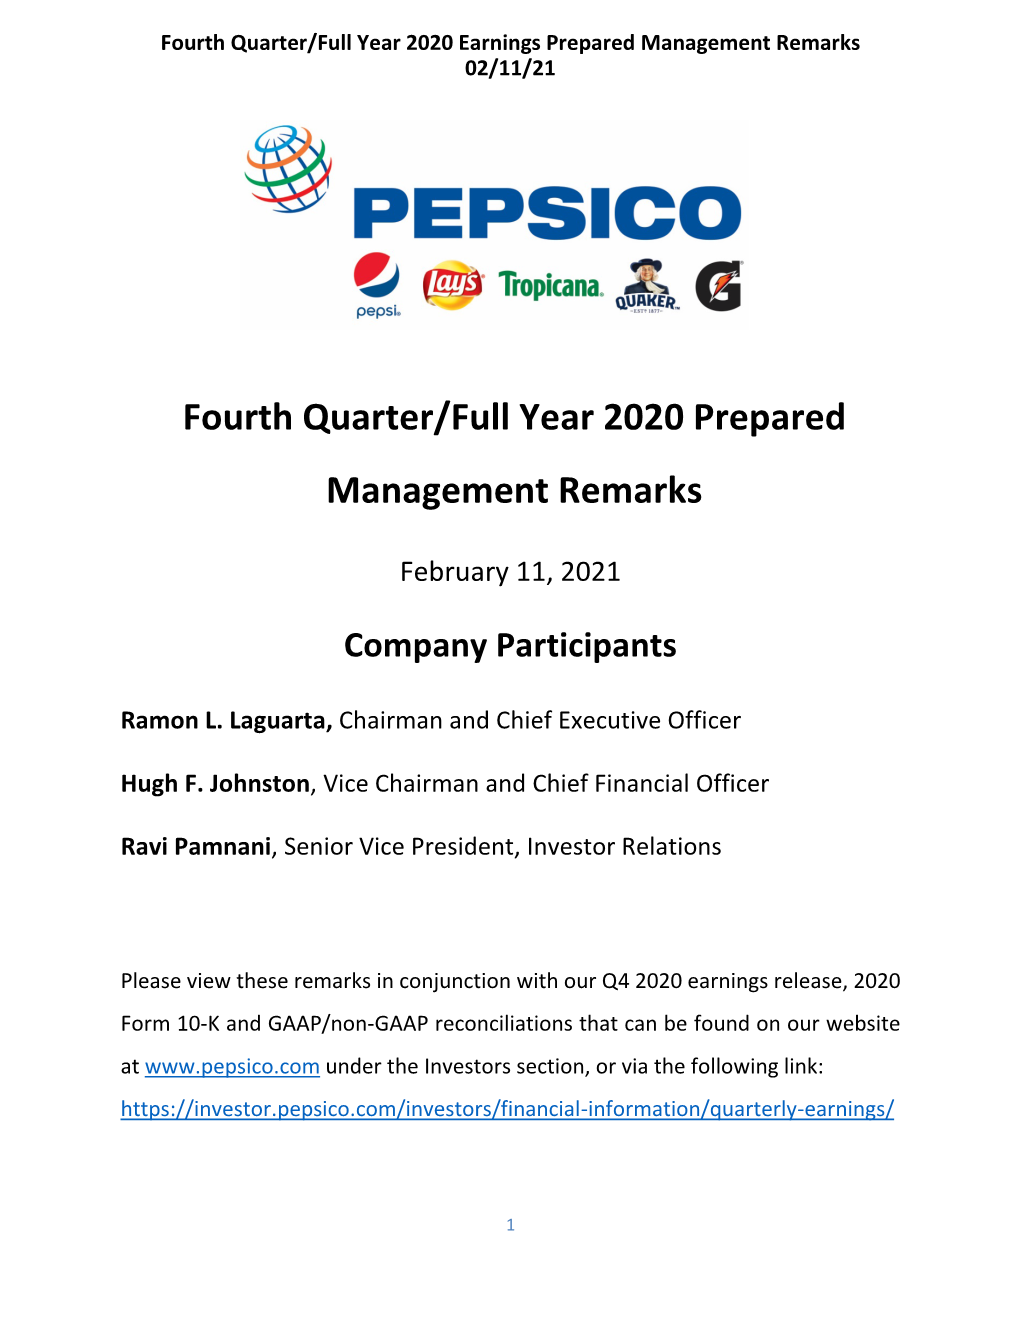 Fourth Quarter/Full Year 2020 Prepared Management Remarks